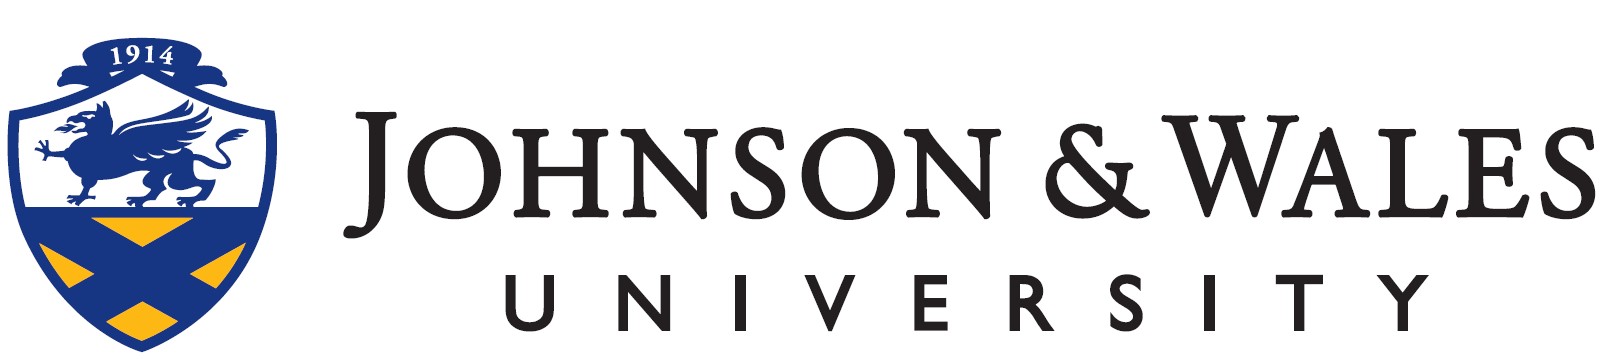 Johnson & Wales University - Miami logo